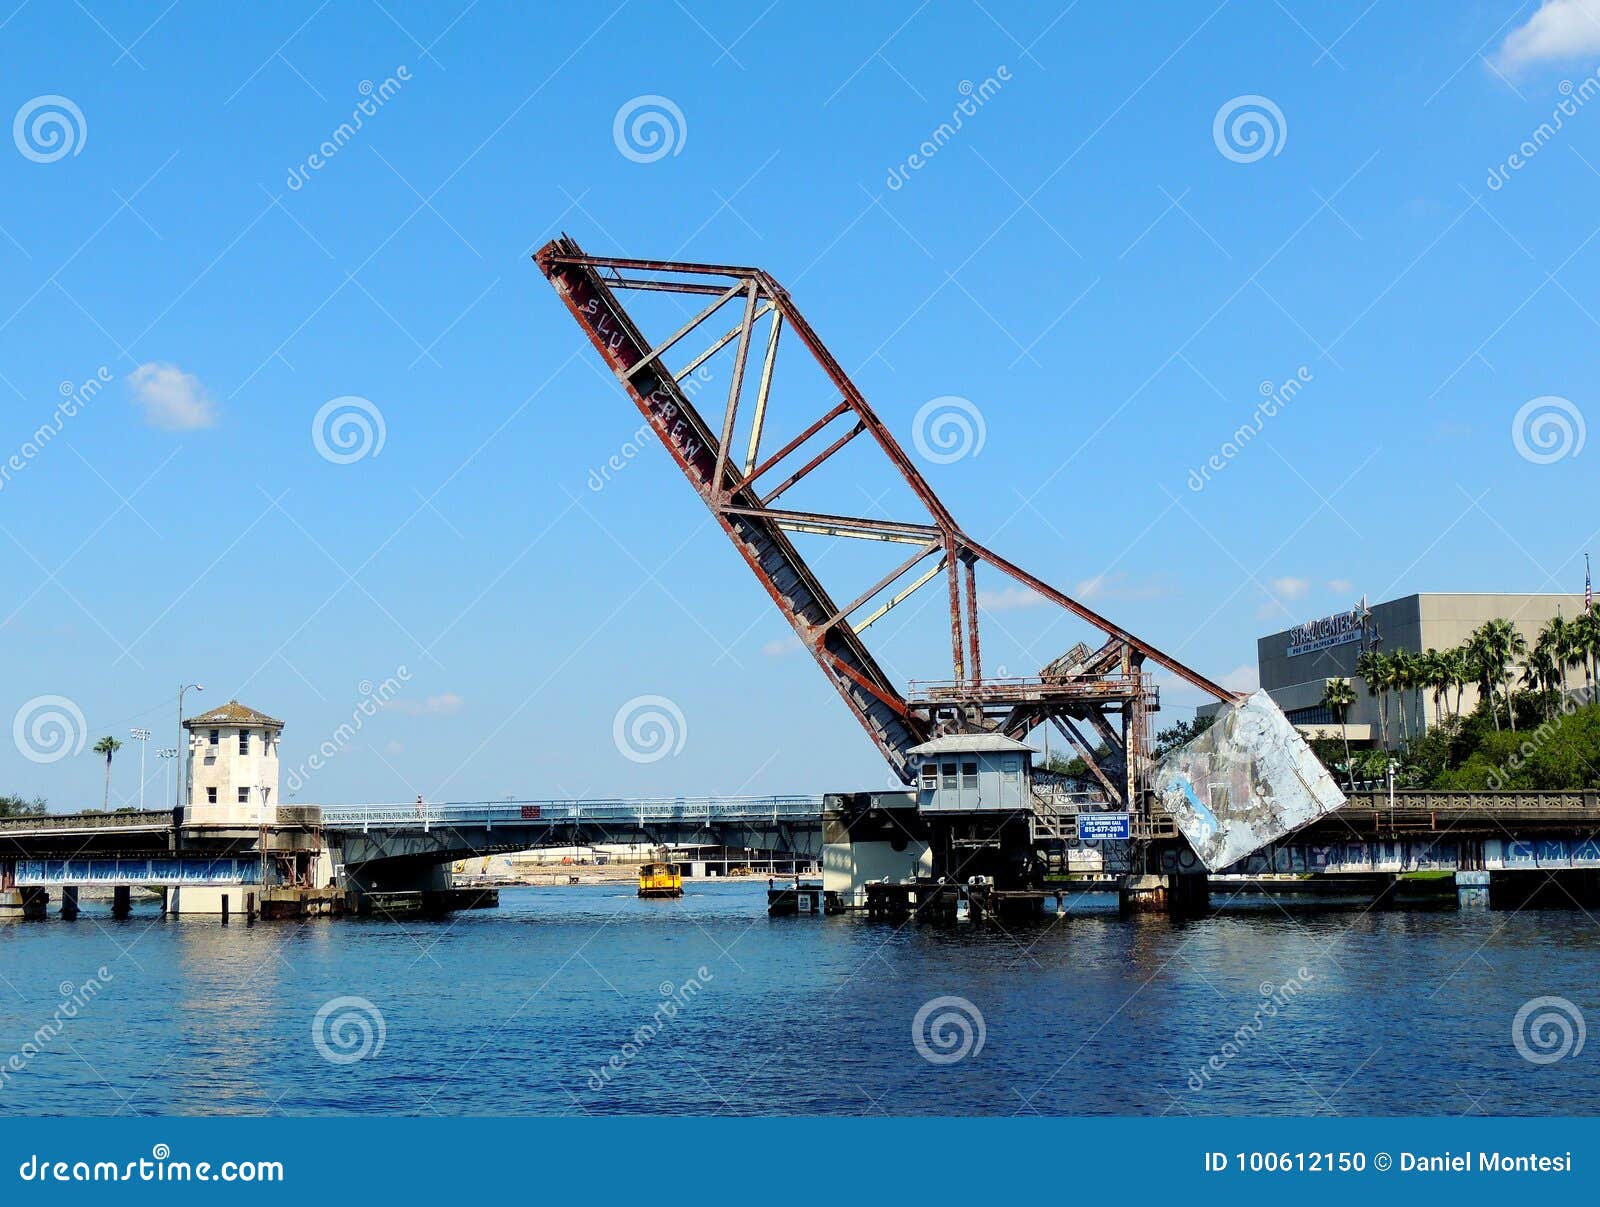 train-bridge-tampa-florida-train-bridge-tampa-florida-open-position-counterweight-style-bridge-100612150.jpg